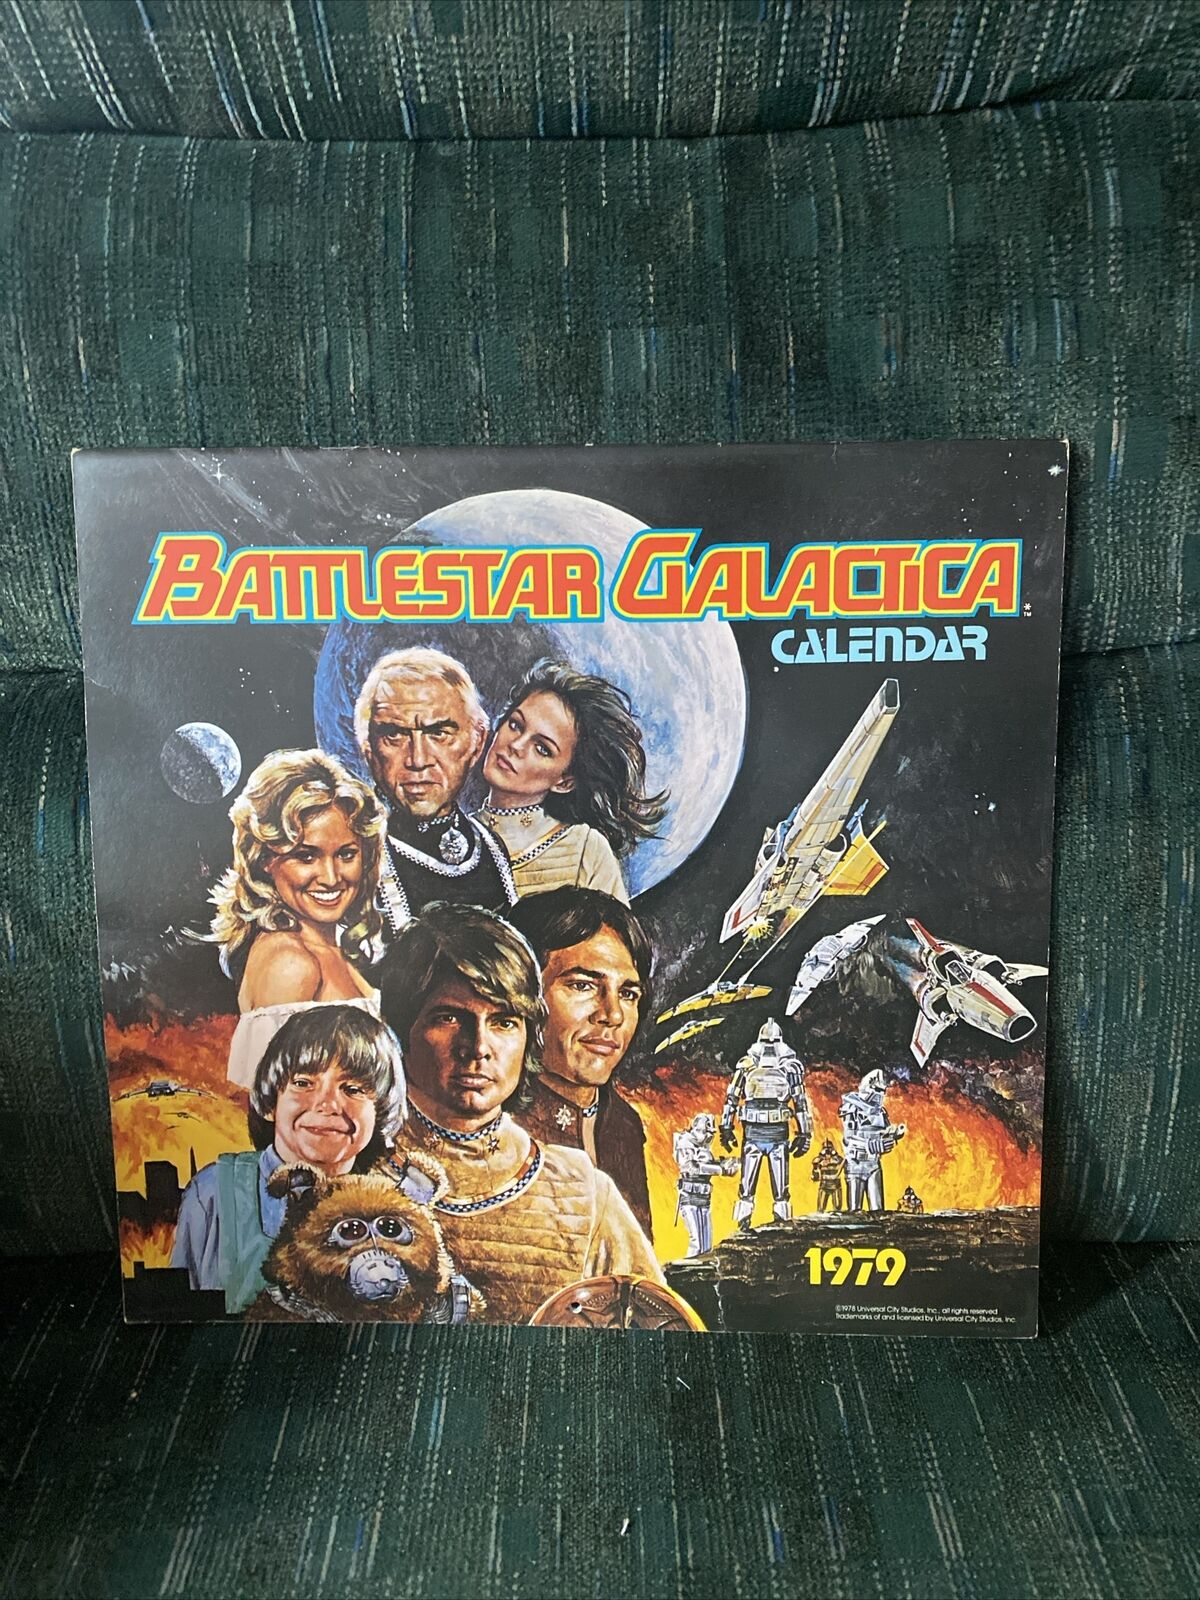 Vintage 1979 Battlestar Galactica Calendar with Full Length Poster